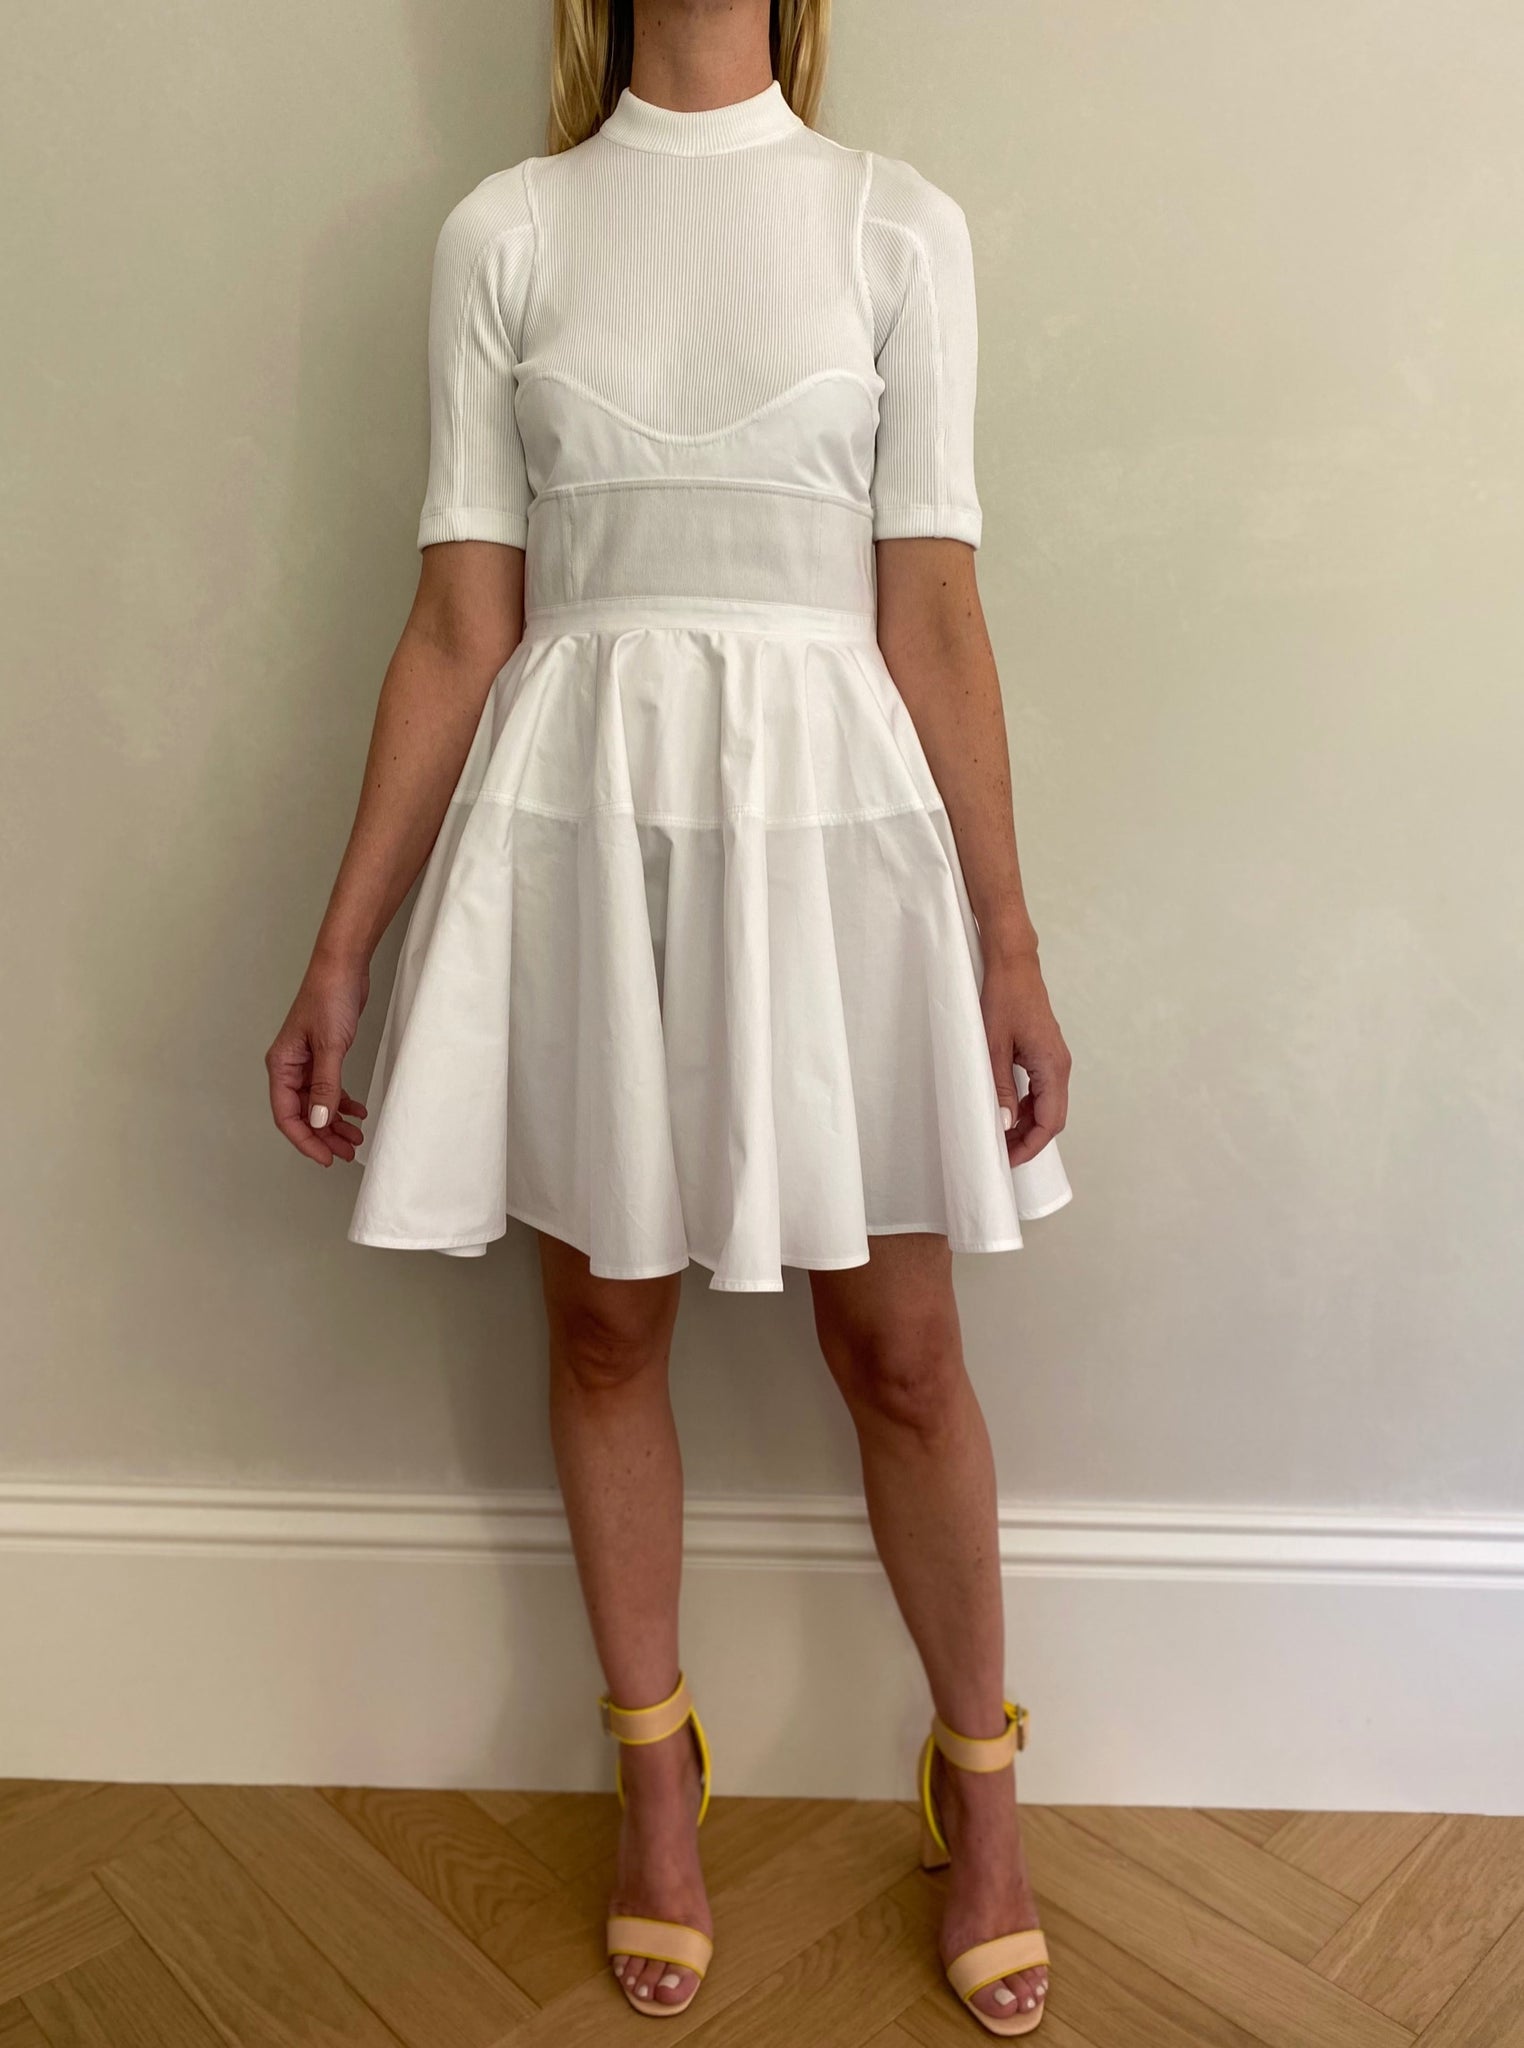 Preloved white cotton dress by Alexander Wang